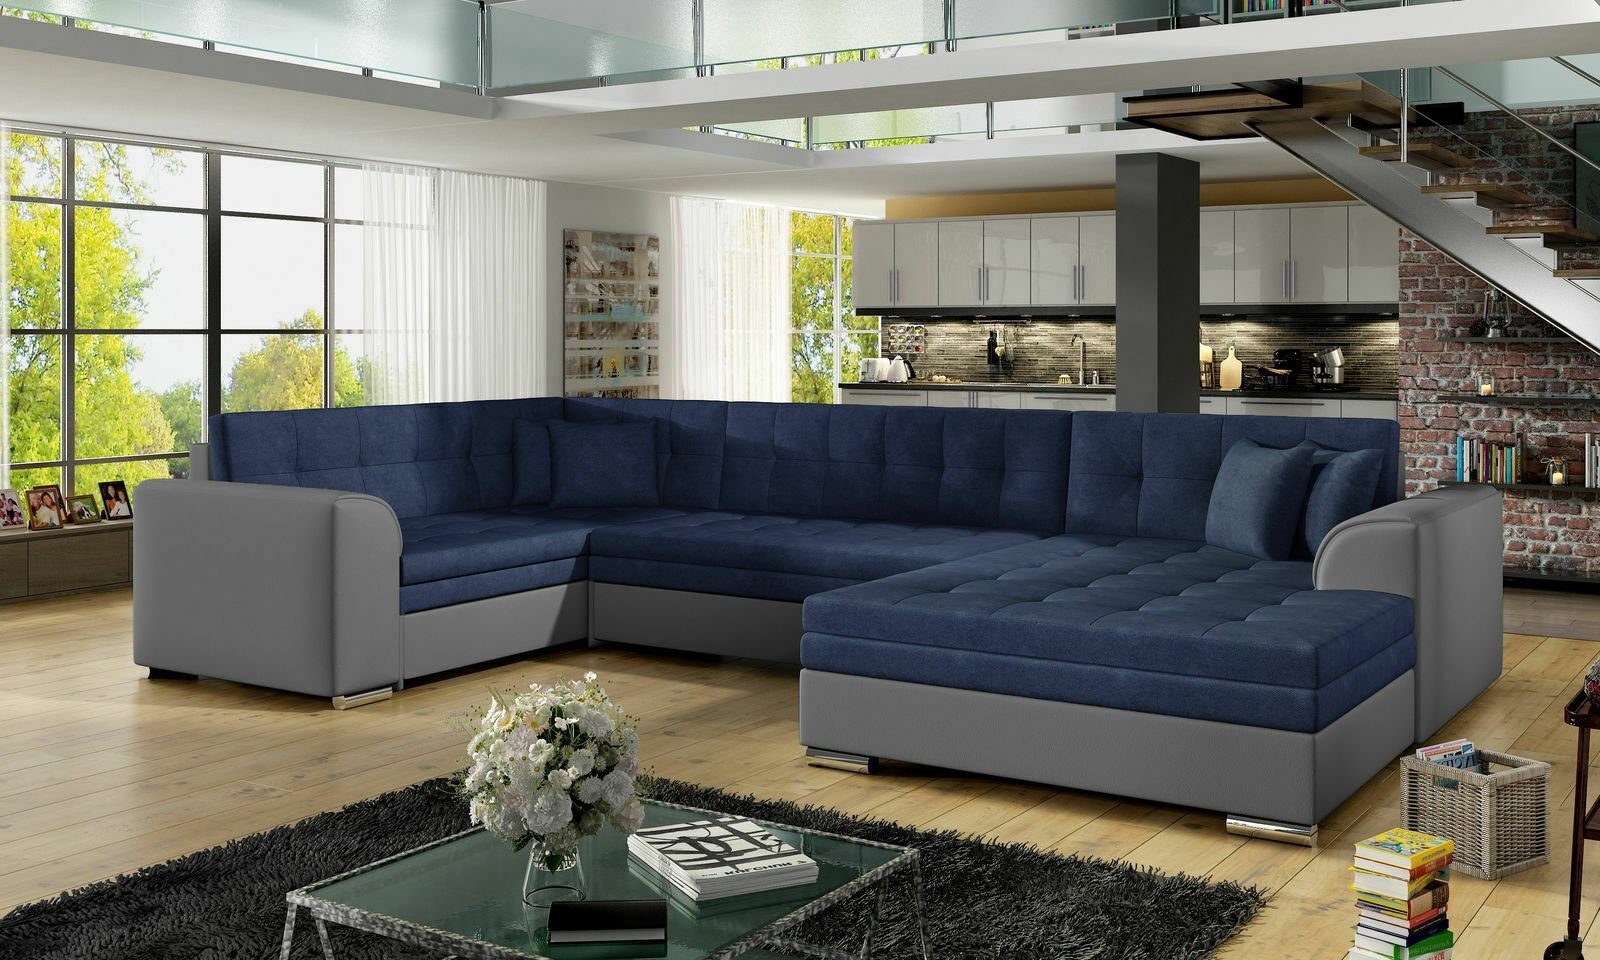 Schlafsofa JVmoebel Ecksofa Ecksofa Bettfunktion Design Leder Textil Blau/Grau Mit Bettfunktion Couch Polster,